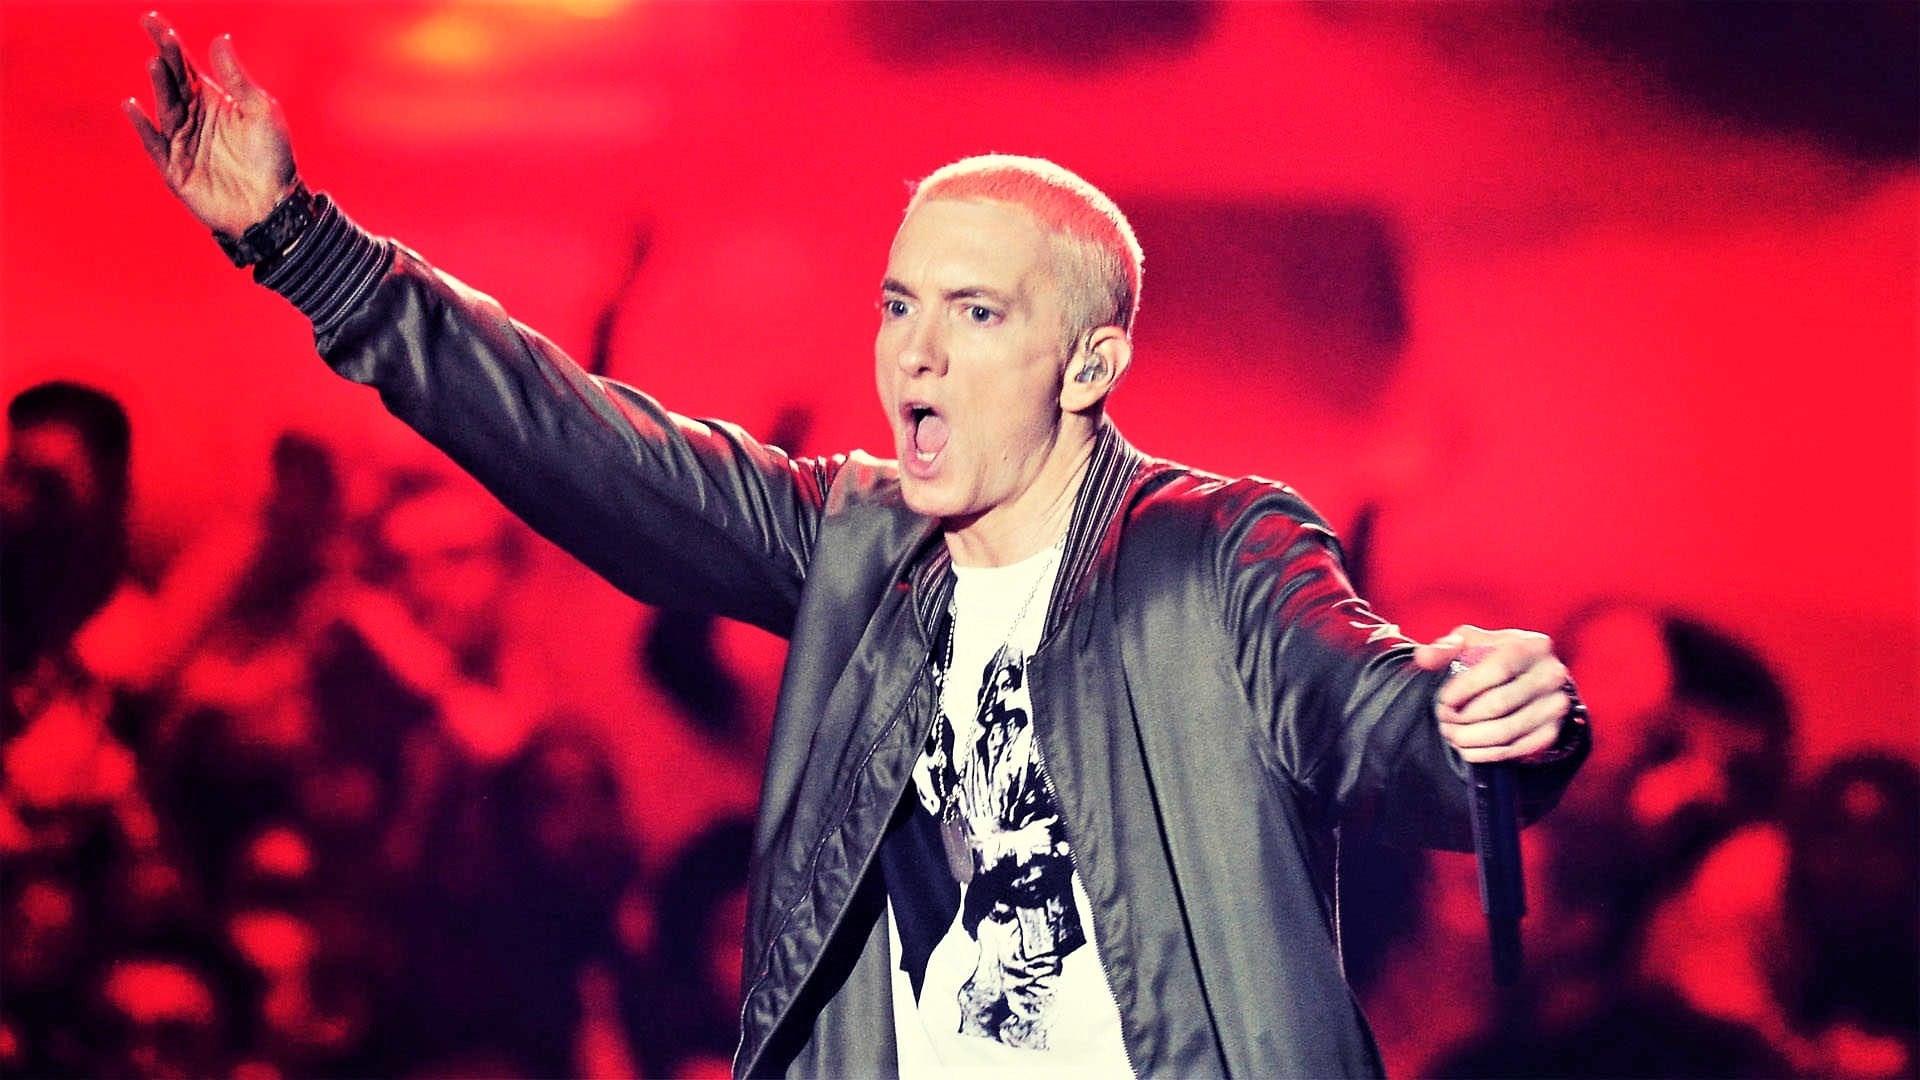 Eminem - Live from New York City 2005 backdrop